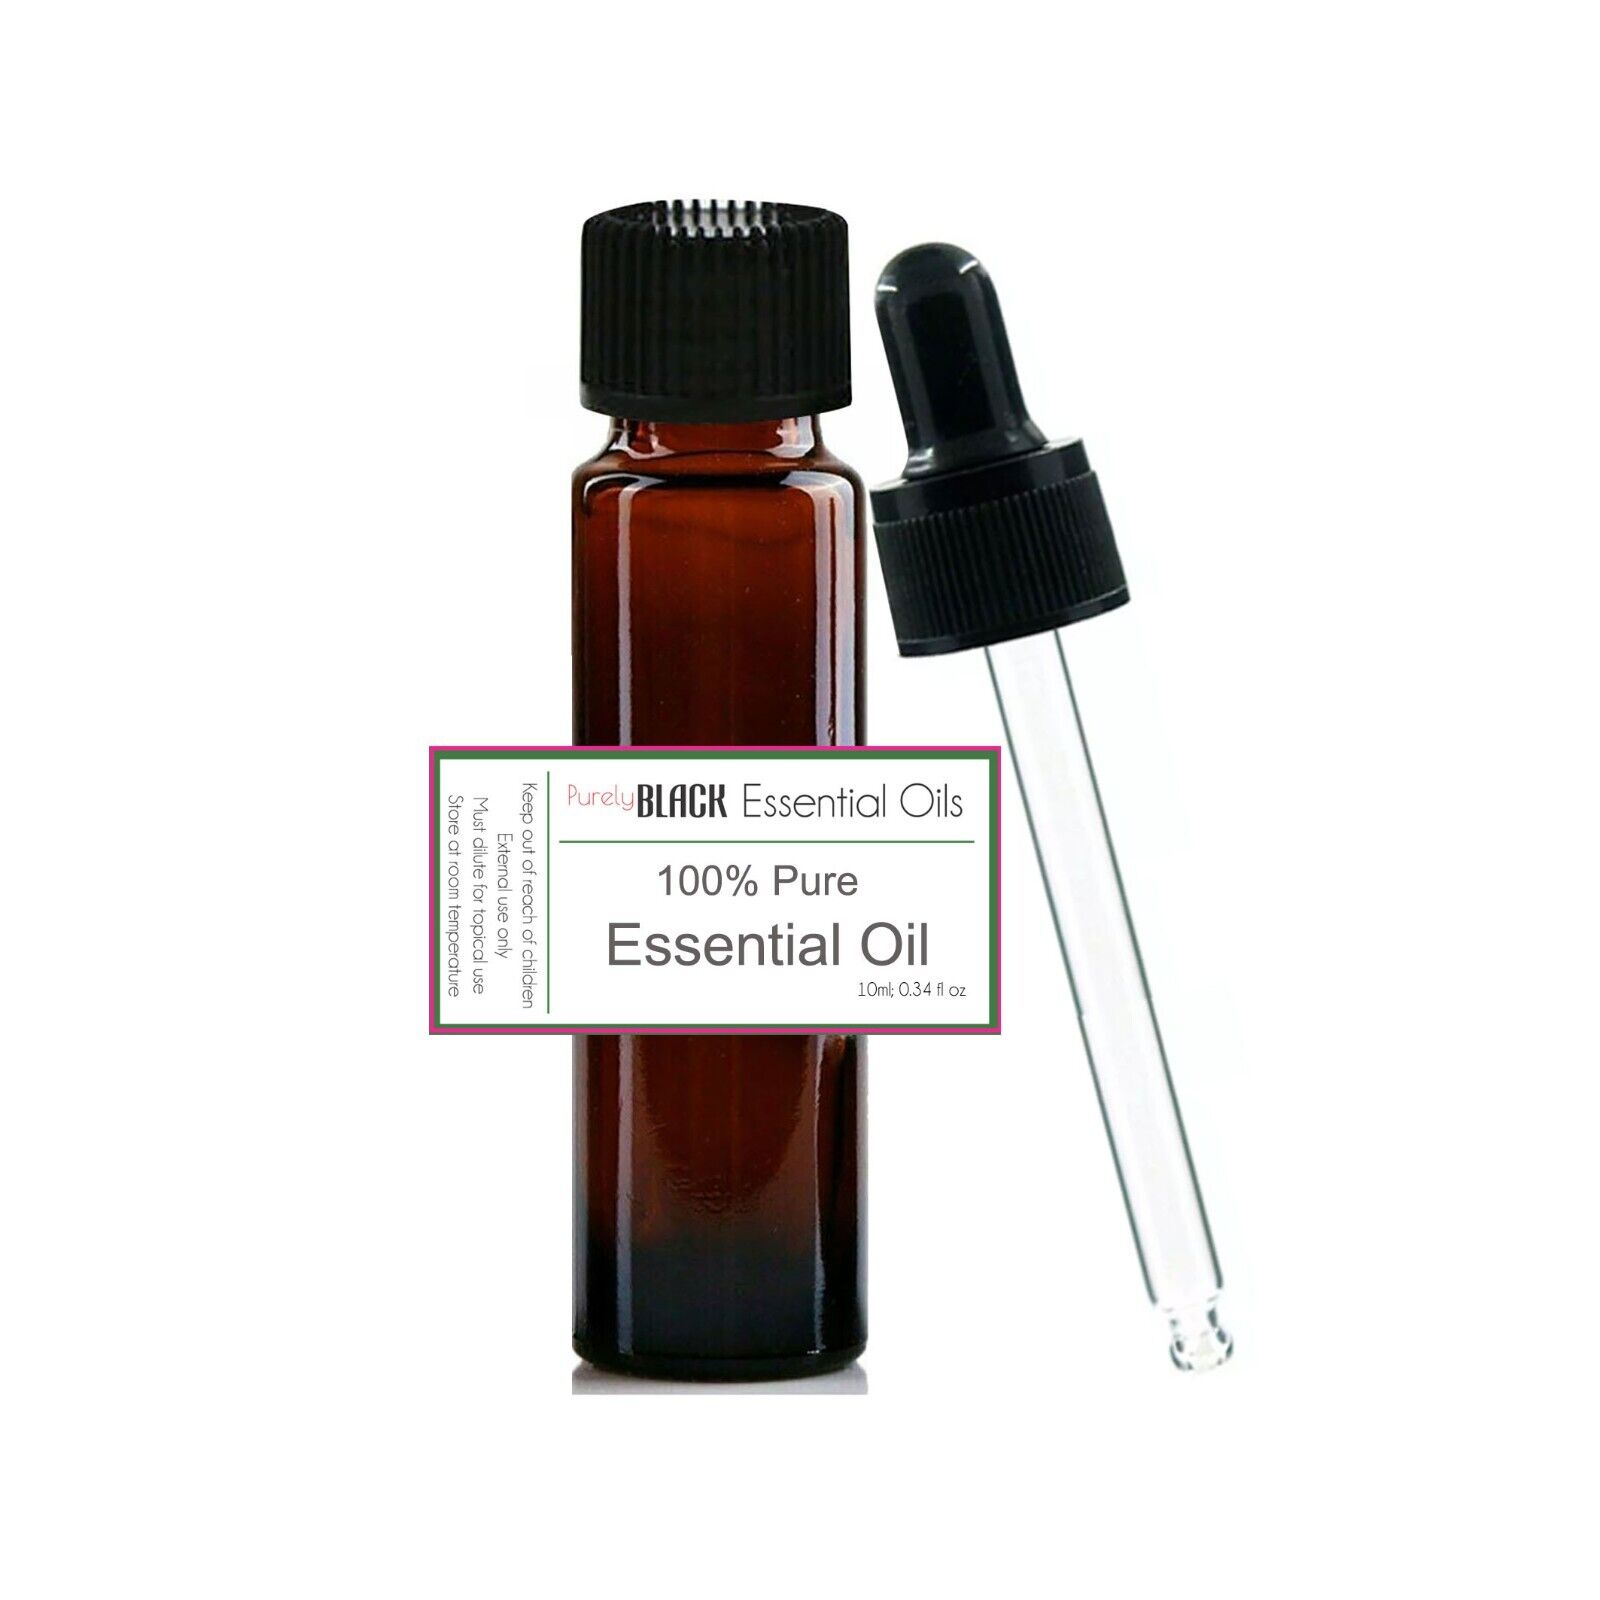 Pure Essential Oils 10ml For Diffuser, Aromatherapy, Skincare - Sandalwood, Lavender, Lemon, Tea Tree, Eucalyptus, Peppermint, Orange, Coffee, Vanilla, Rose Oil and MORE